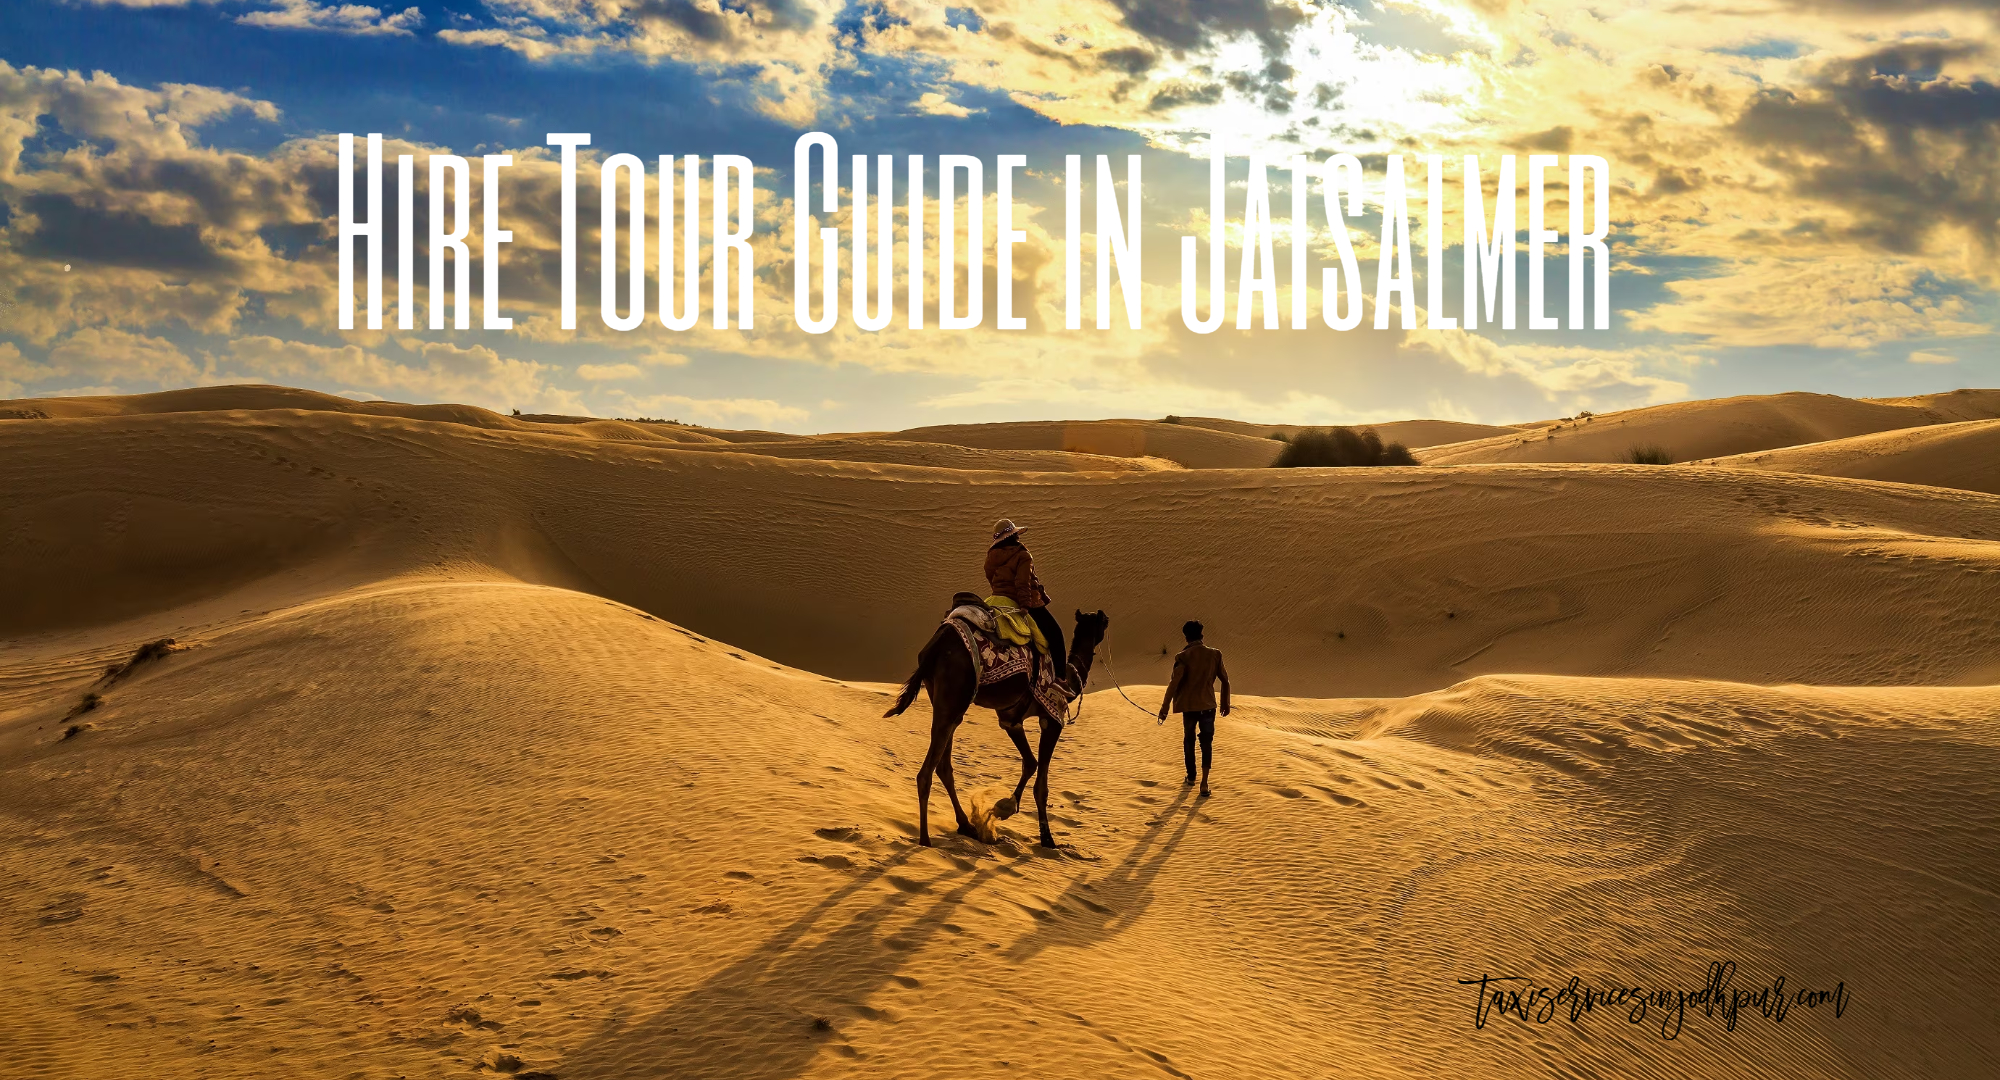 hire tour guide in jaisalmer, jaisalmer travel guide, jaisalmer tourist guide, tour guide in jaisalmer